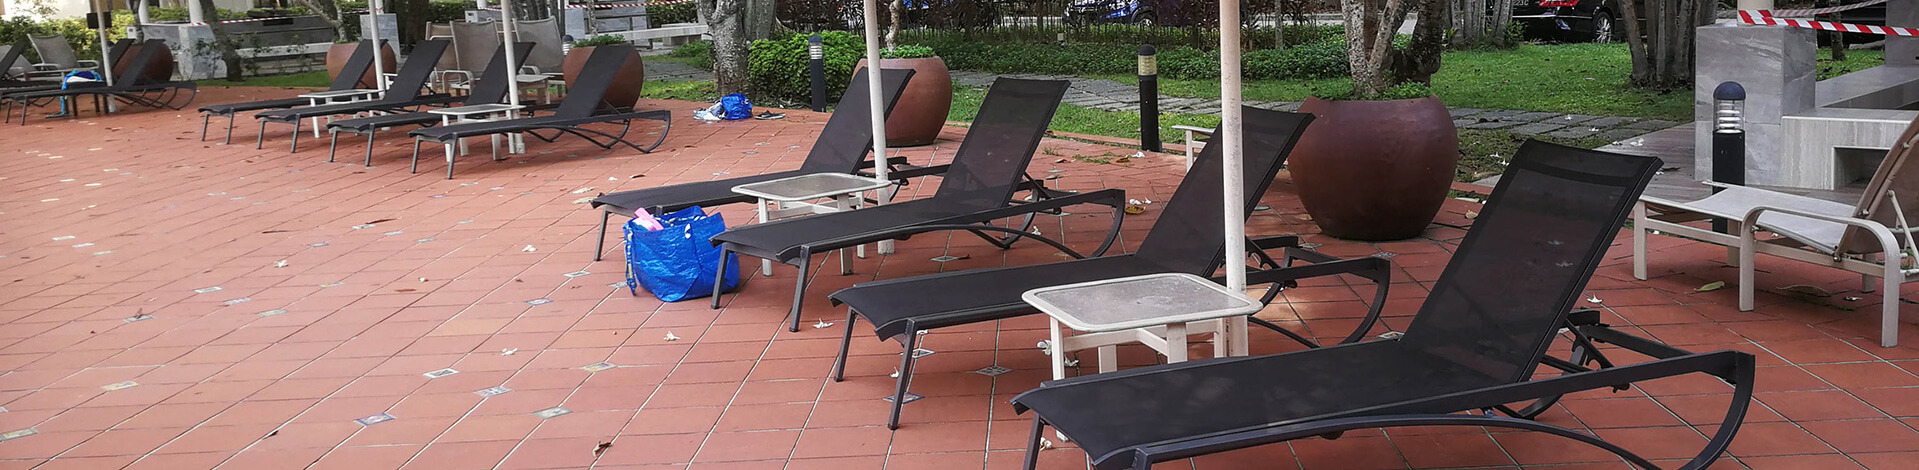 Outdoor Furniture Online Store Singapore | Superdeal Marketing Enterprise